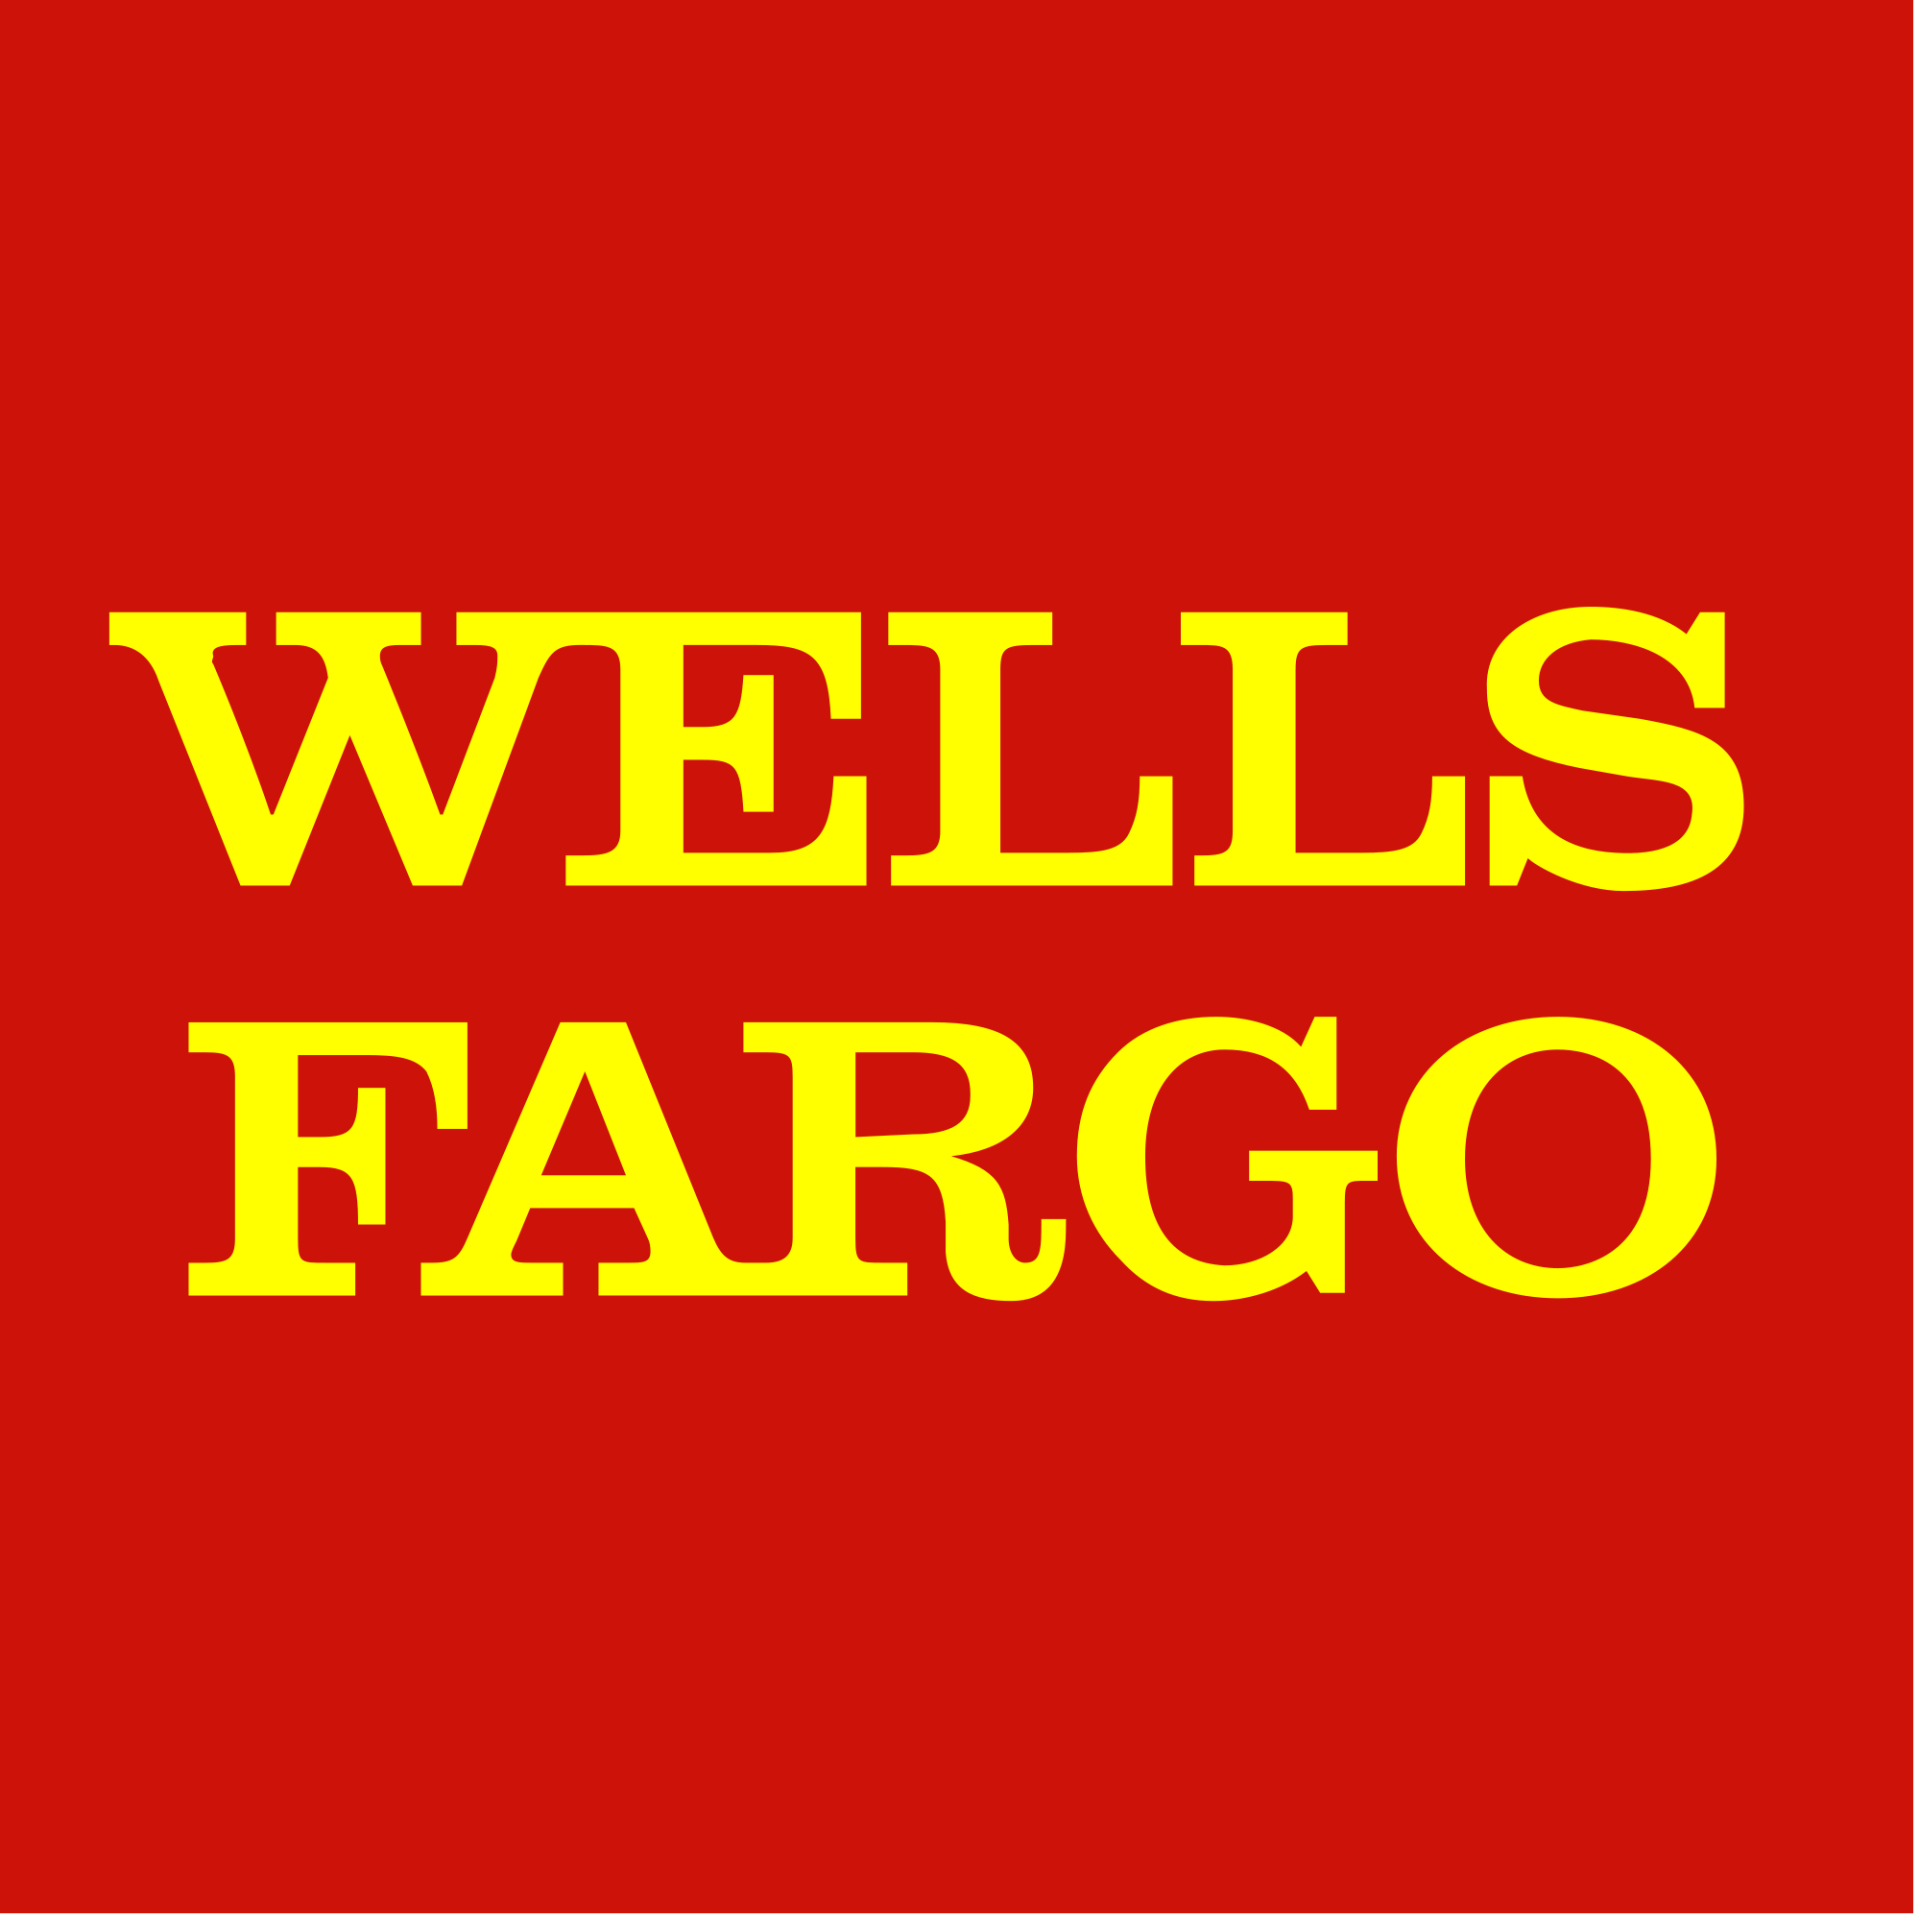 Wells Fargo Bank Stock Chart